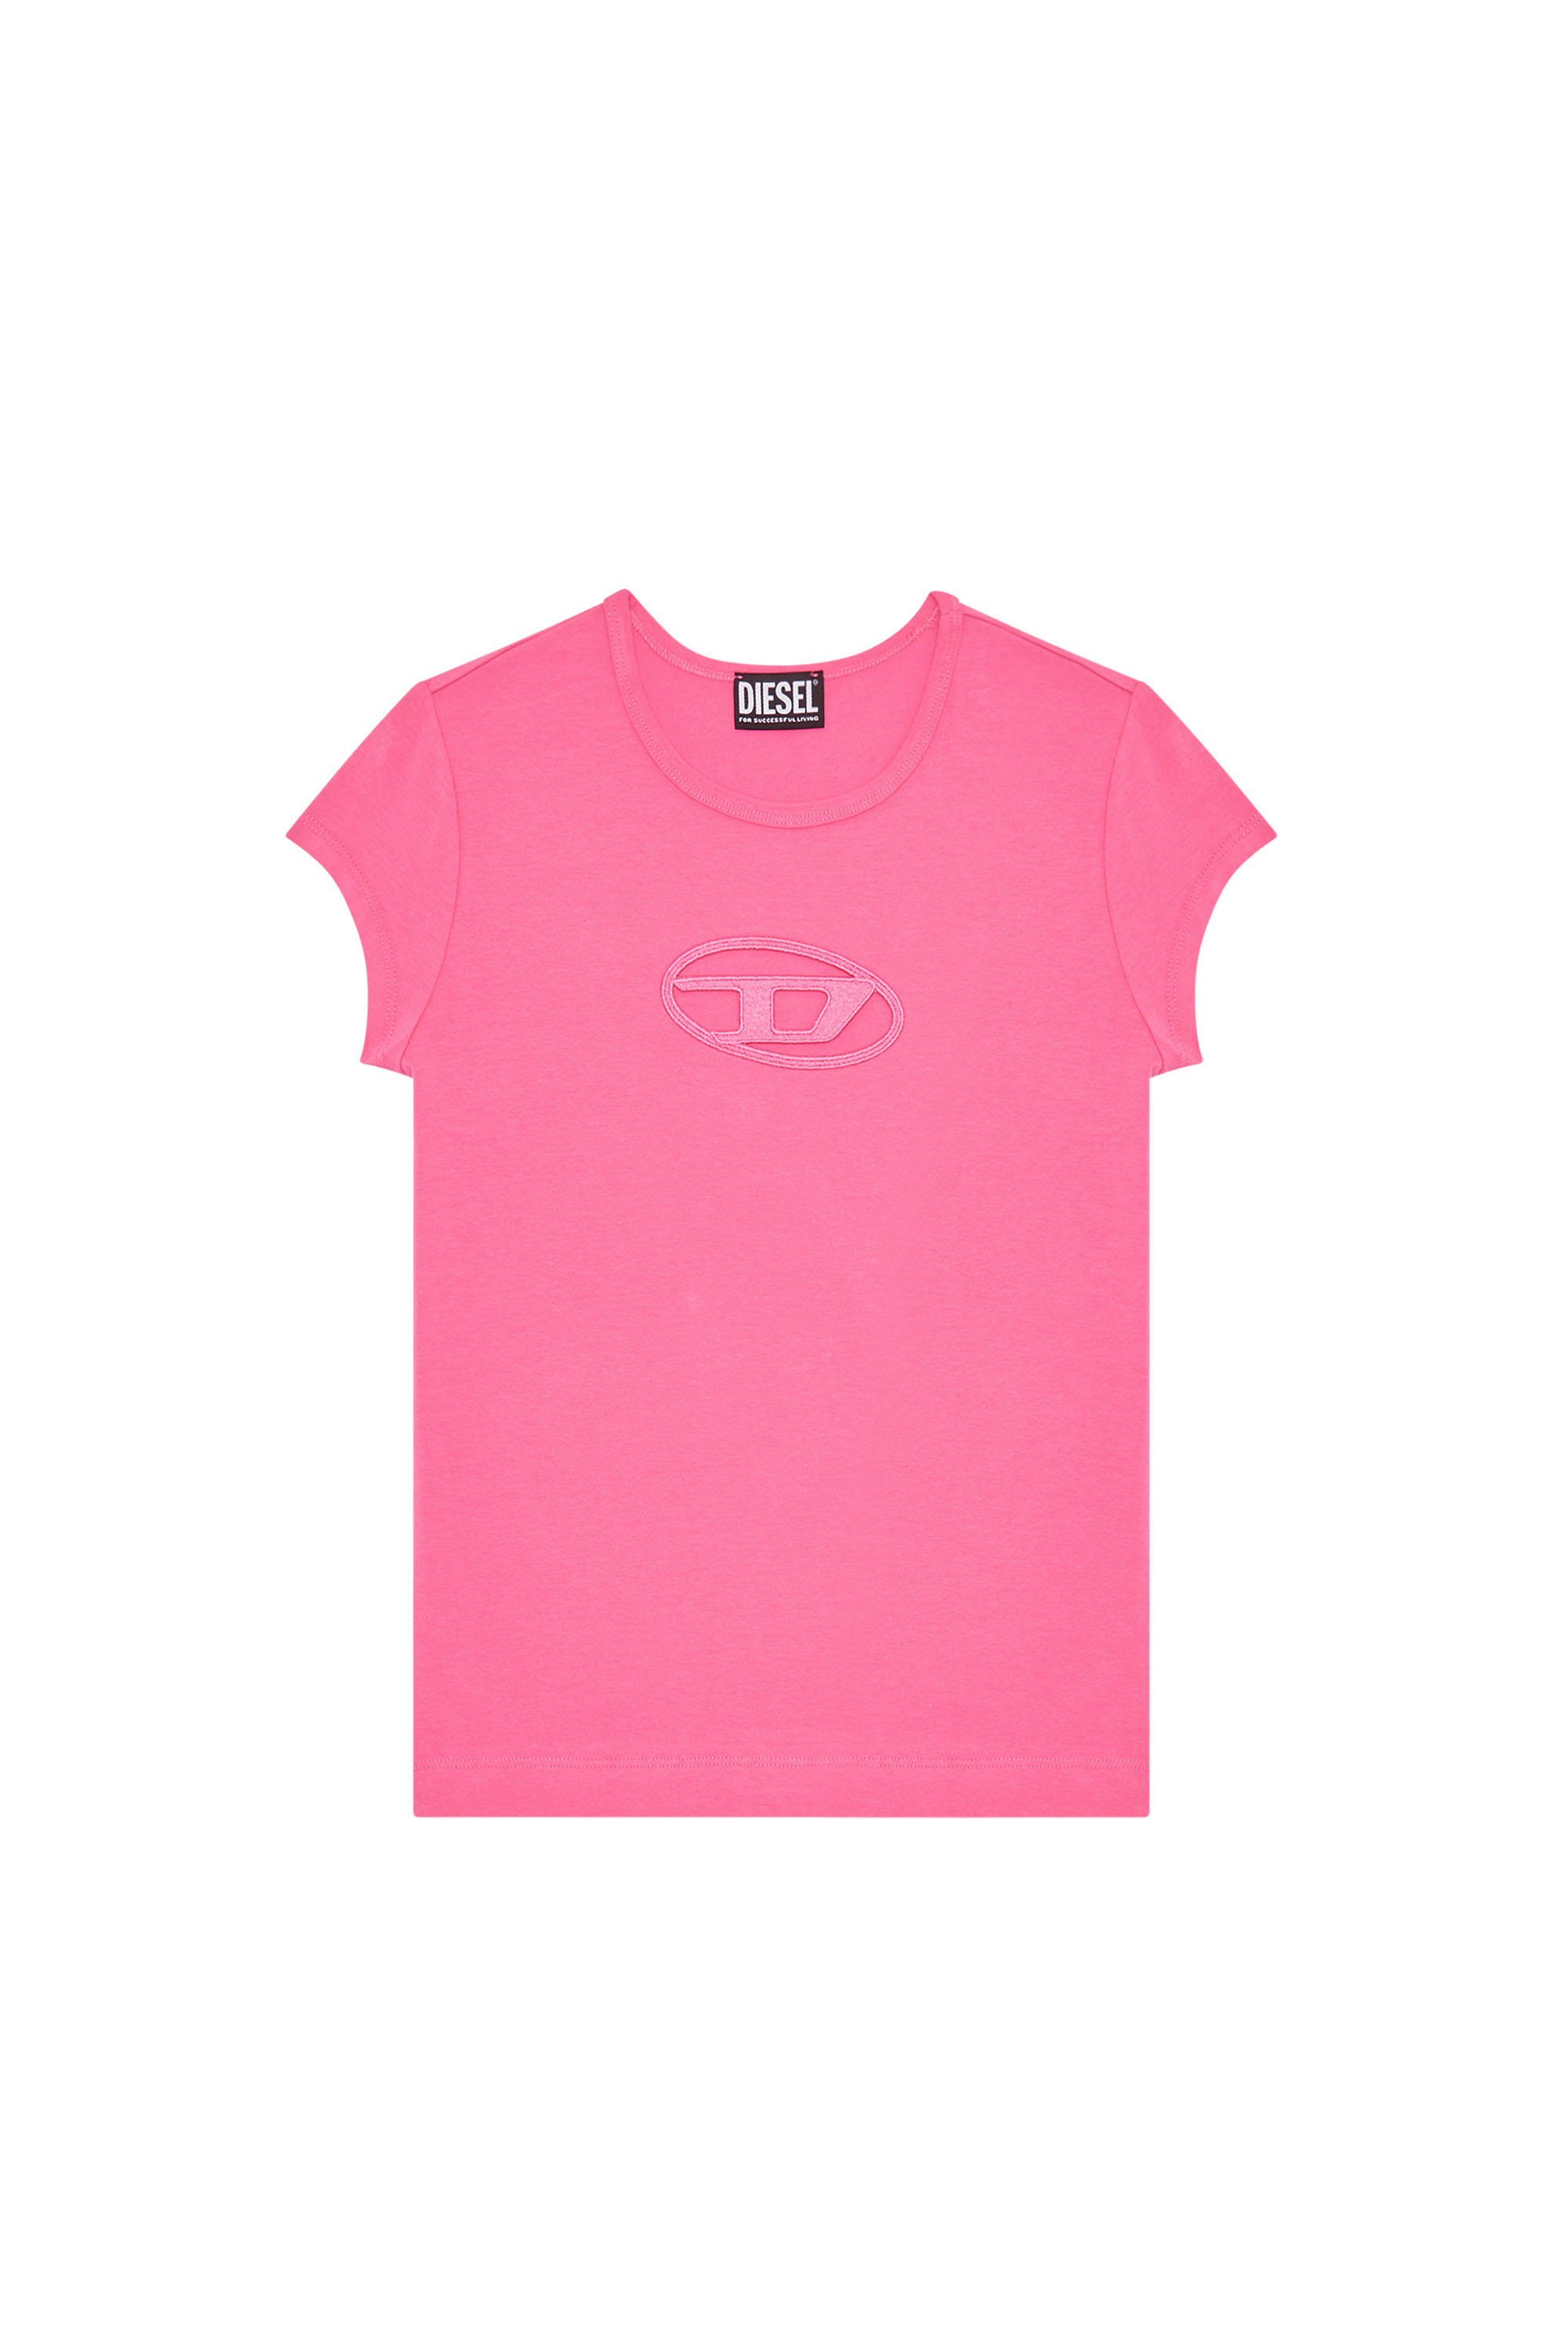 T-ANGIE, Pink - T-Shirts